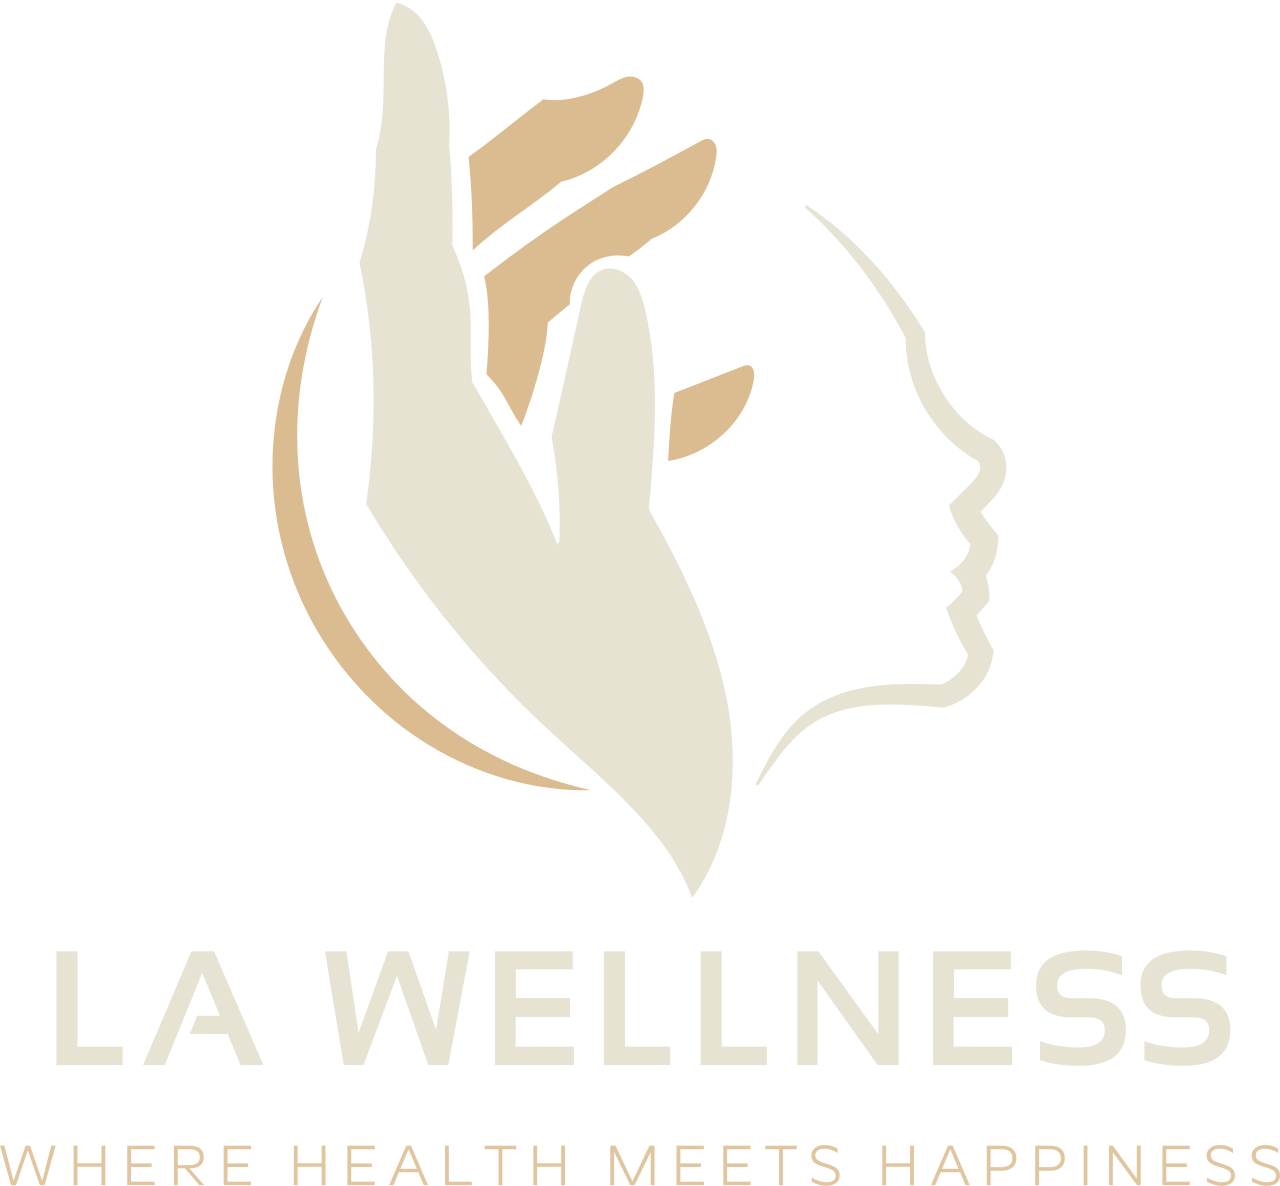 LA Wellness's logo